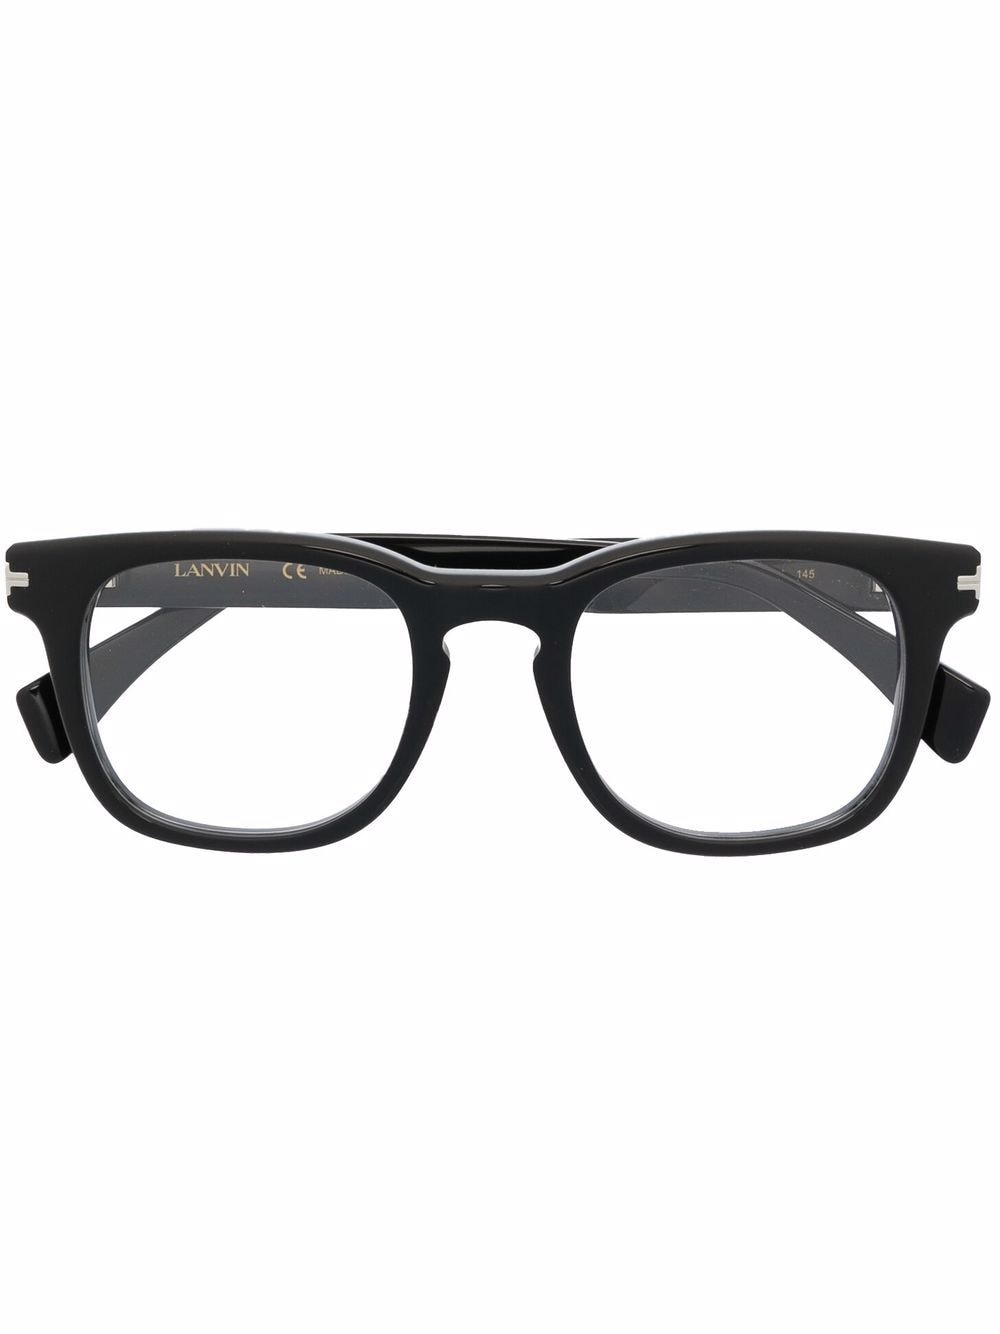 фото Lanvin очки в квадратной оправе с логотипом